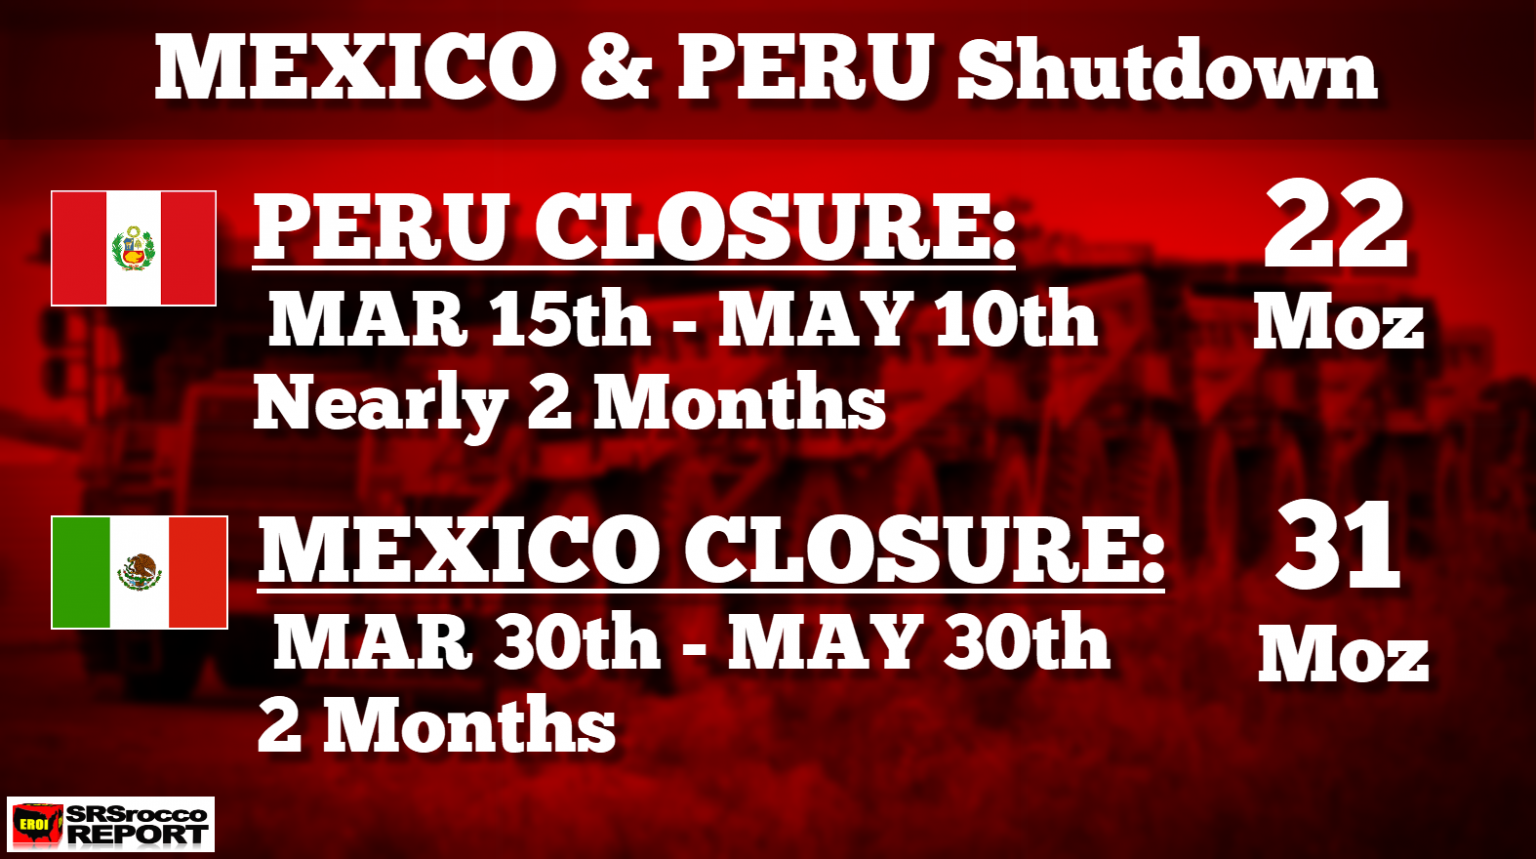 MEXICO & PERU SHUTDOWN Timeline